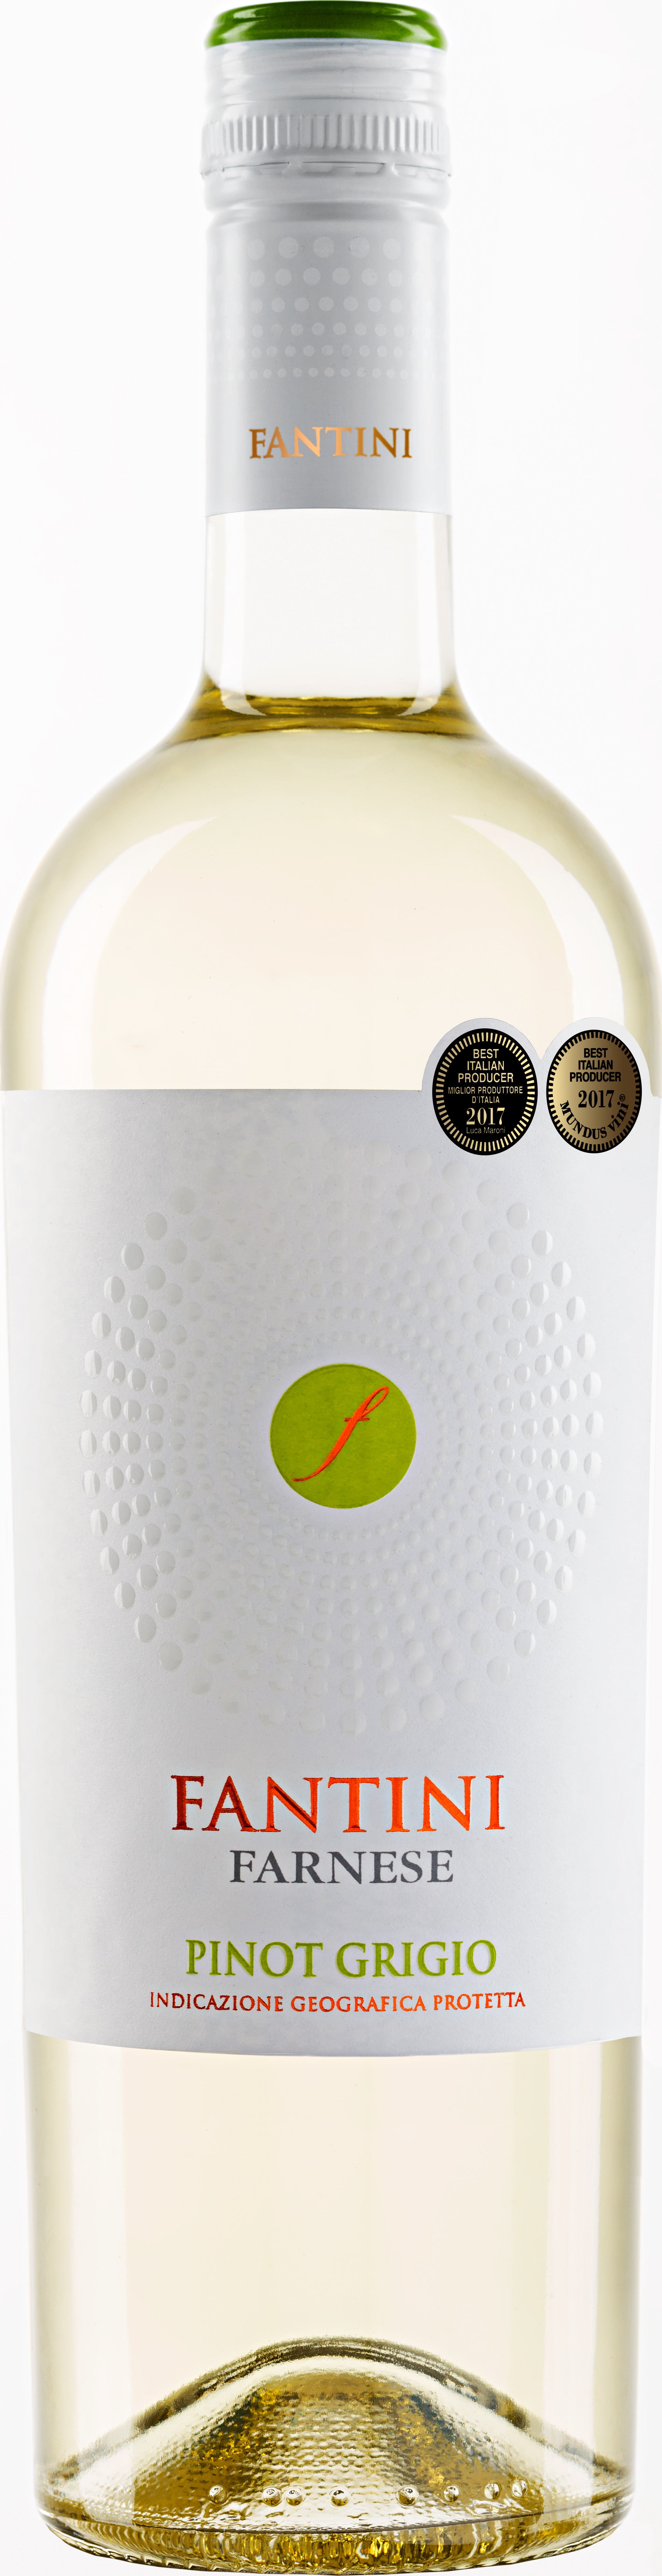 Fantini Farnese Pinot Grigio 2014 - Expert wine ratings and wine ...